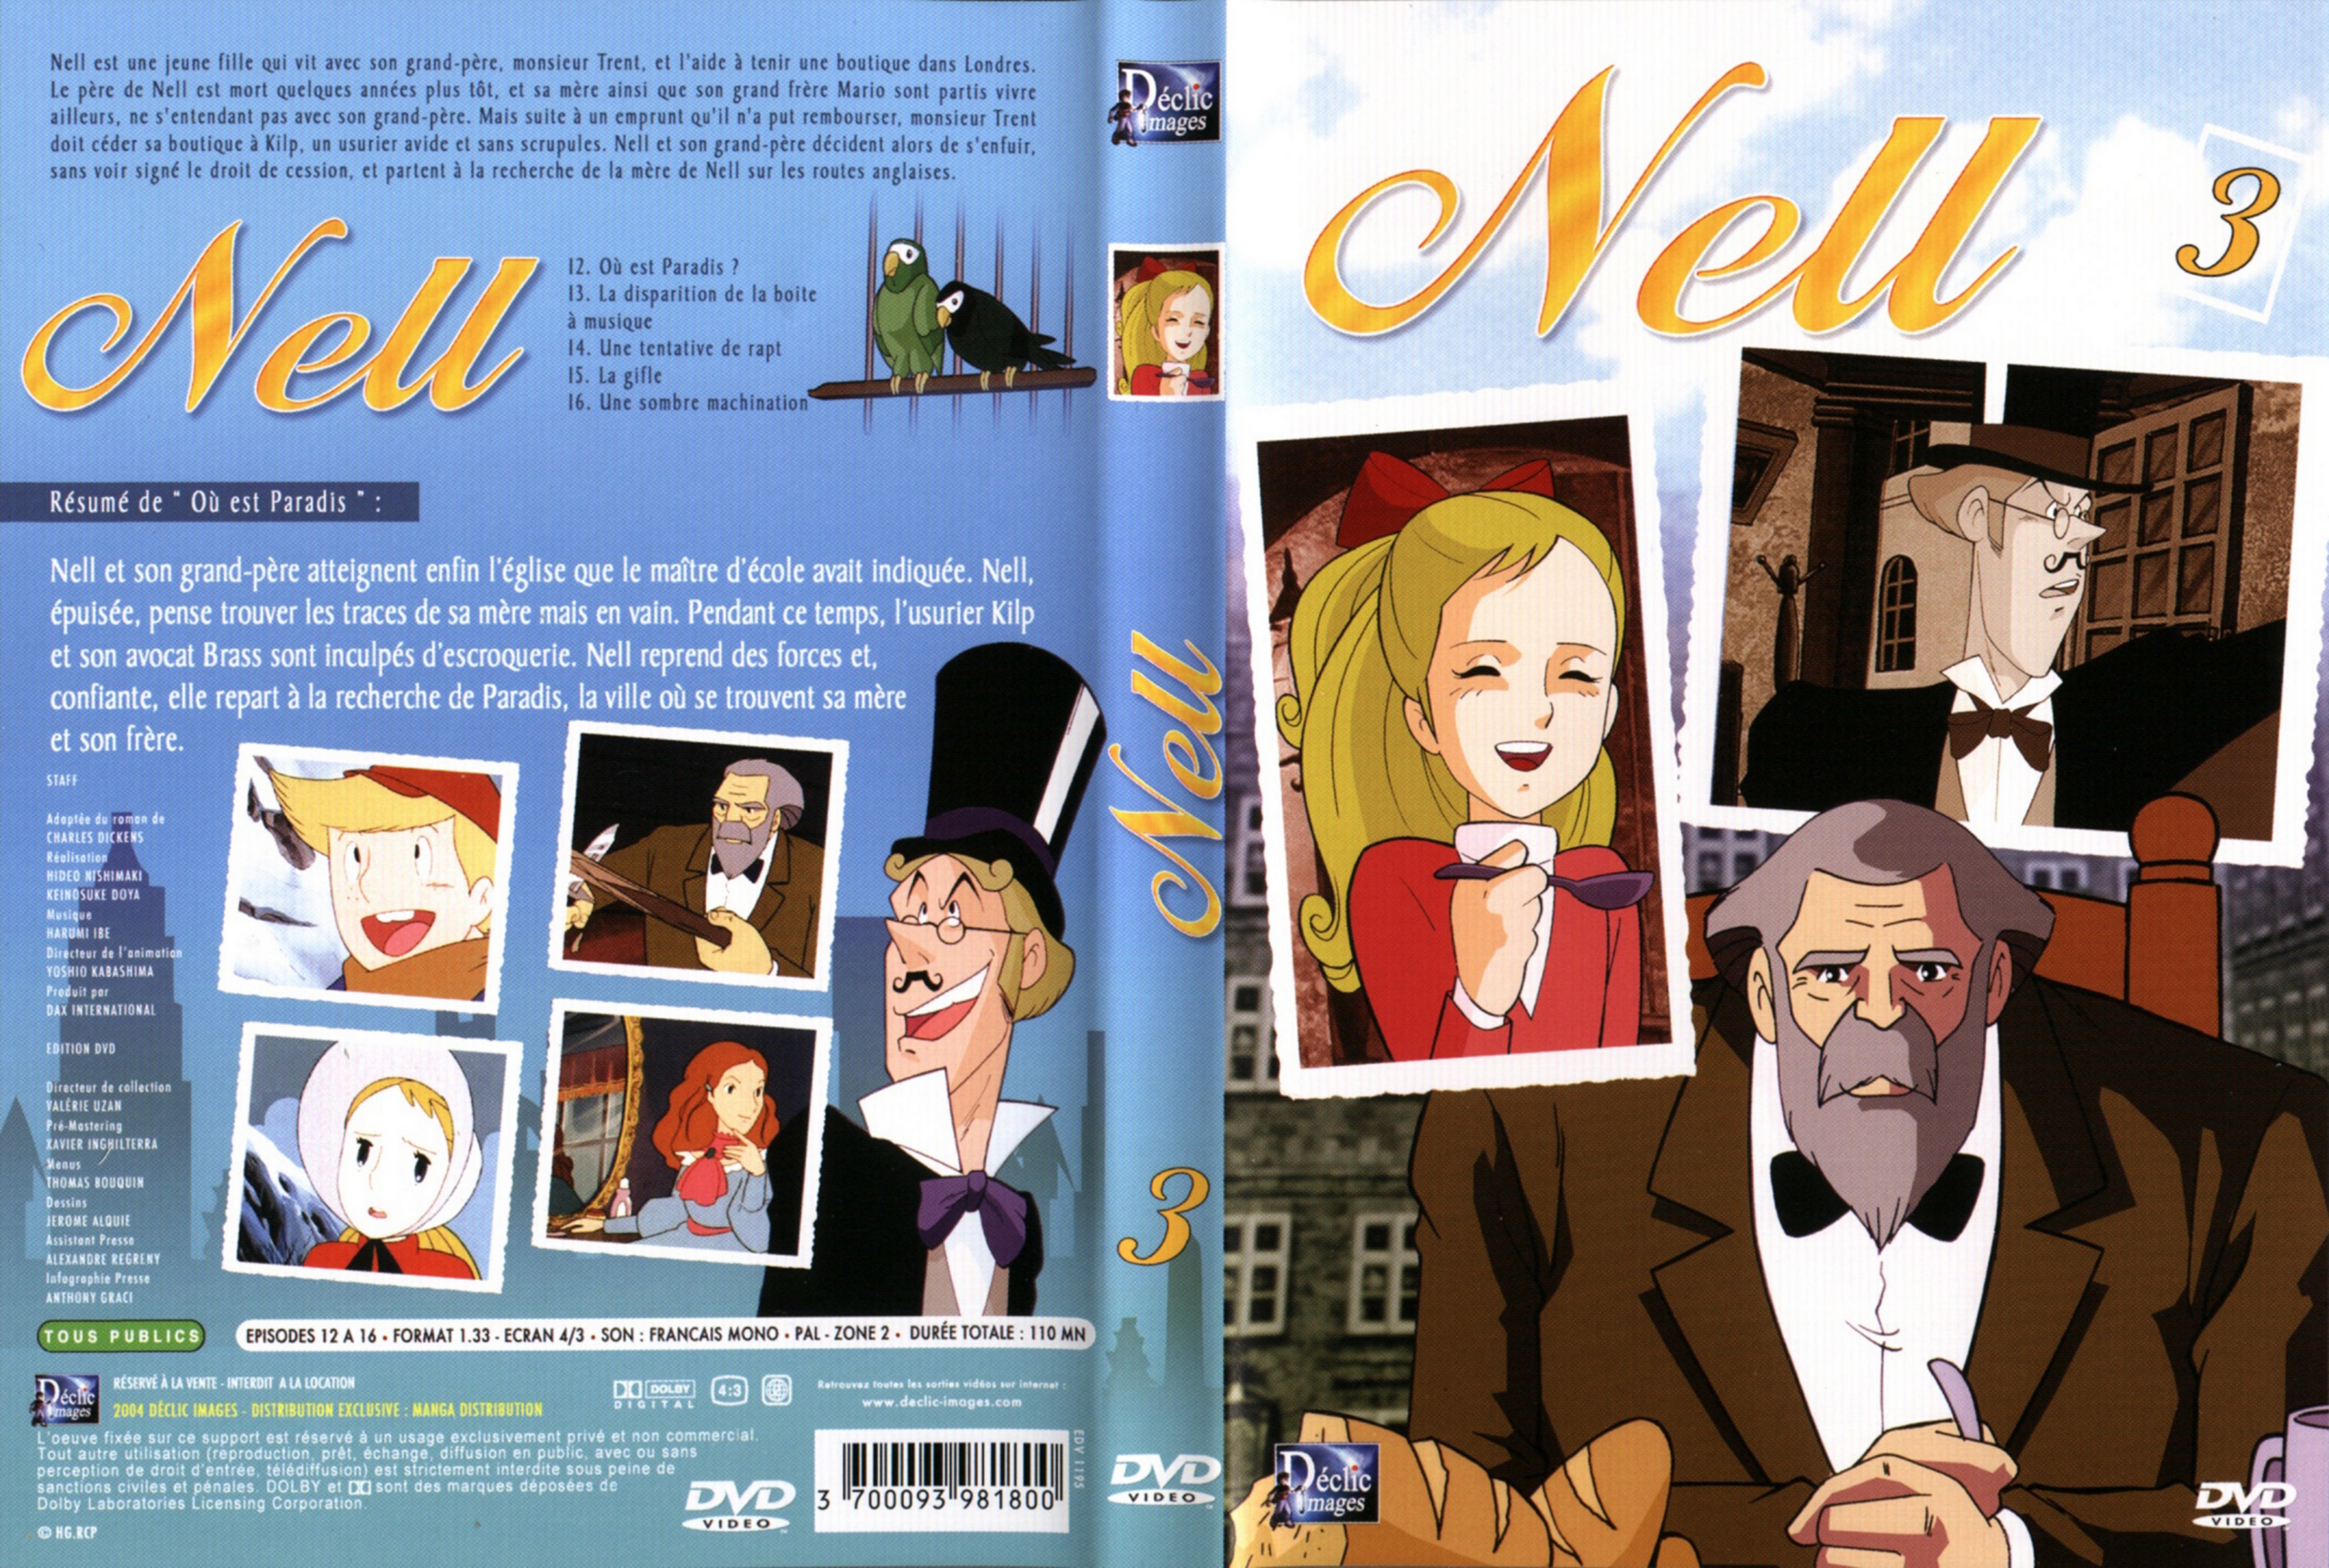 Jaquette DVD Nell vol 3